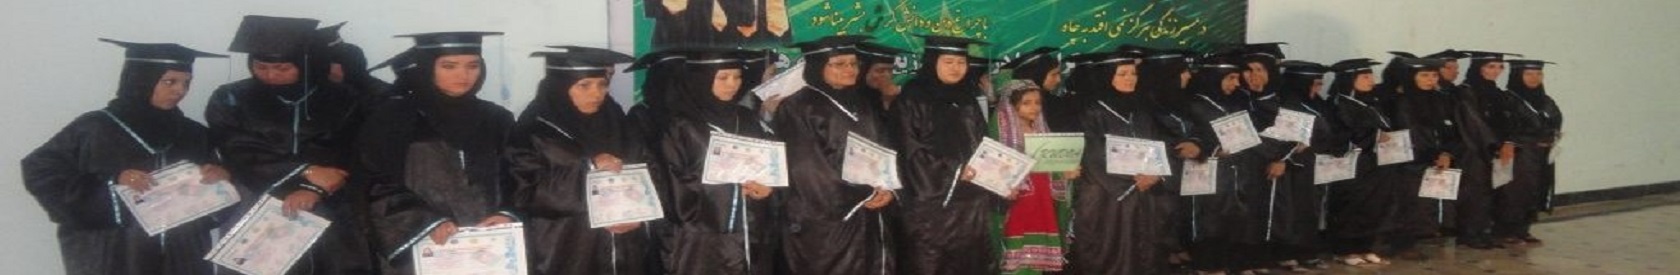 Graduation ceremony for participants of Internship Program for refugee women